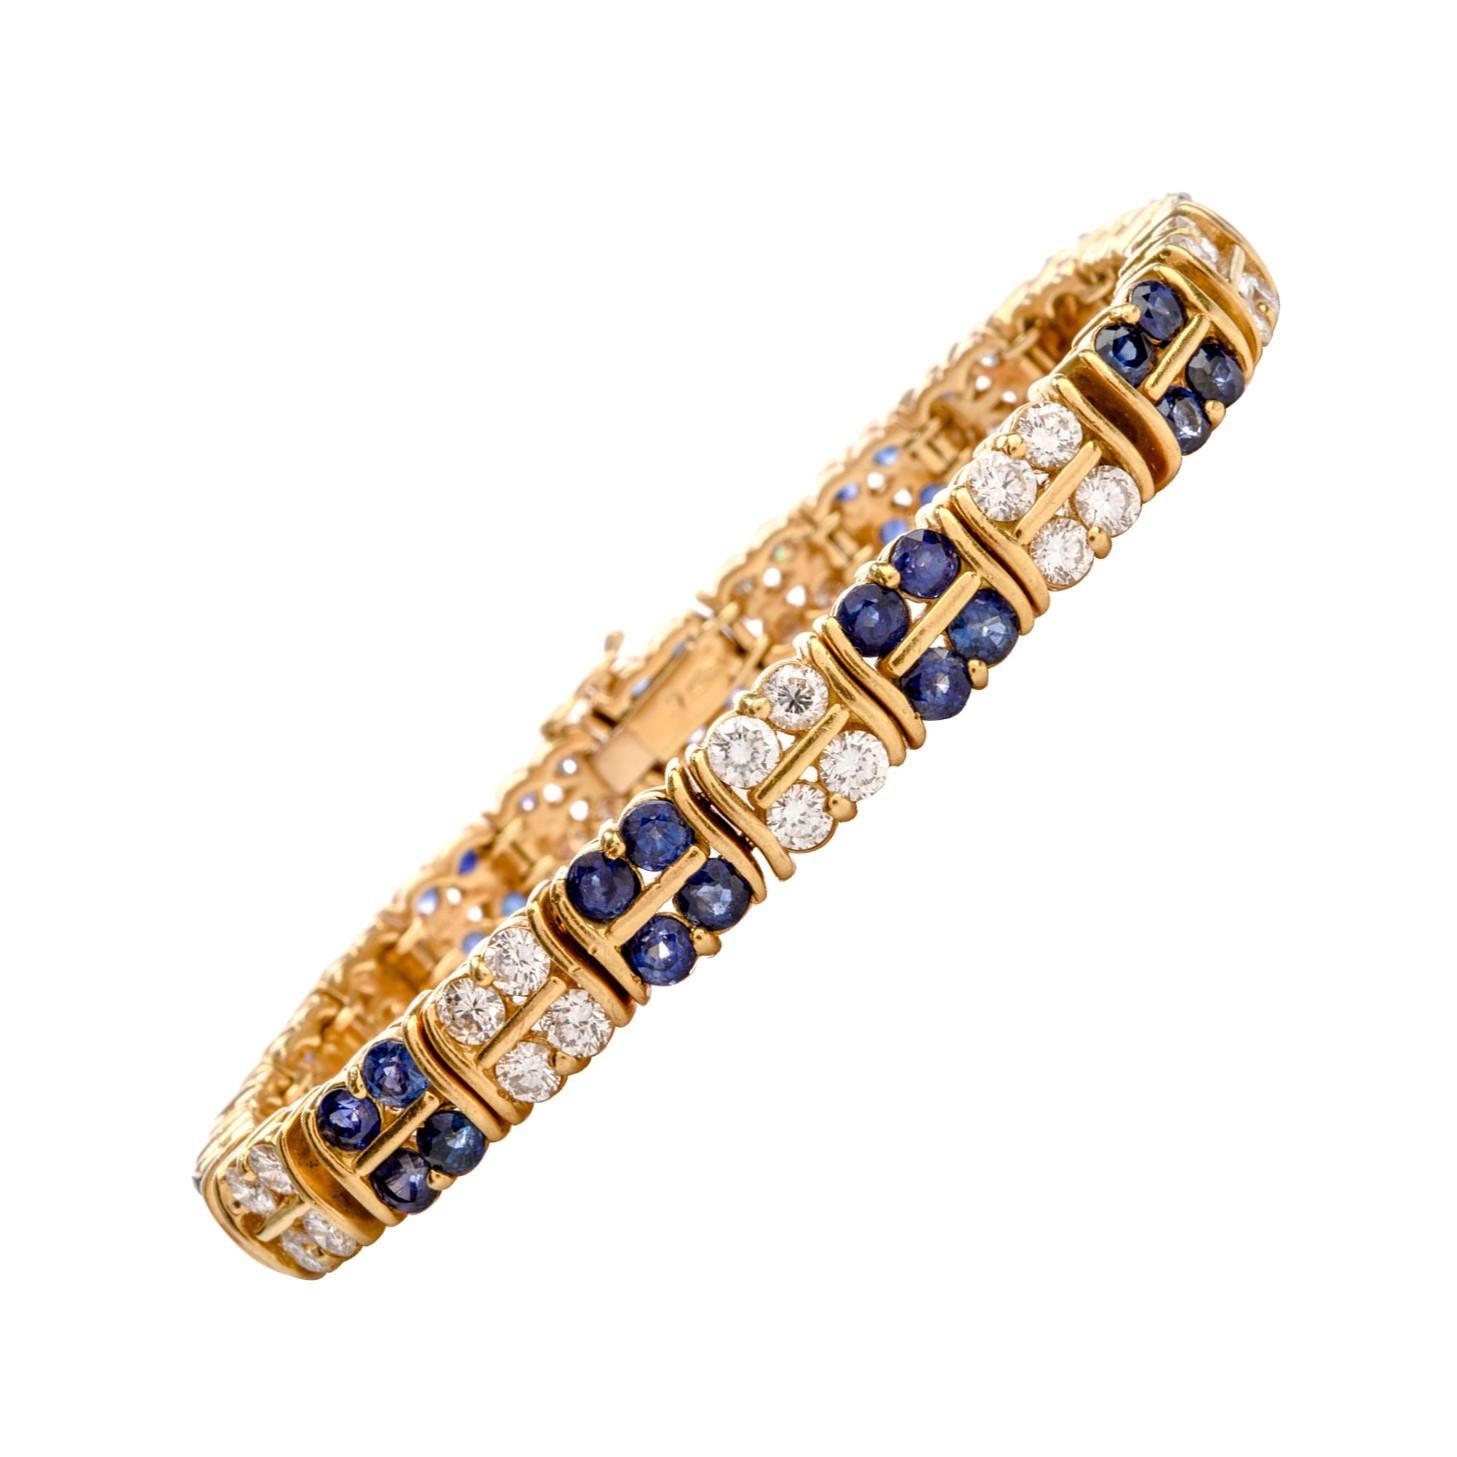 1980s Exquisite Diamond and Sapphire Double S Link 18 Karat Bracelet